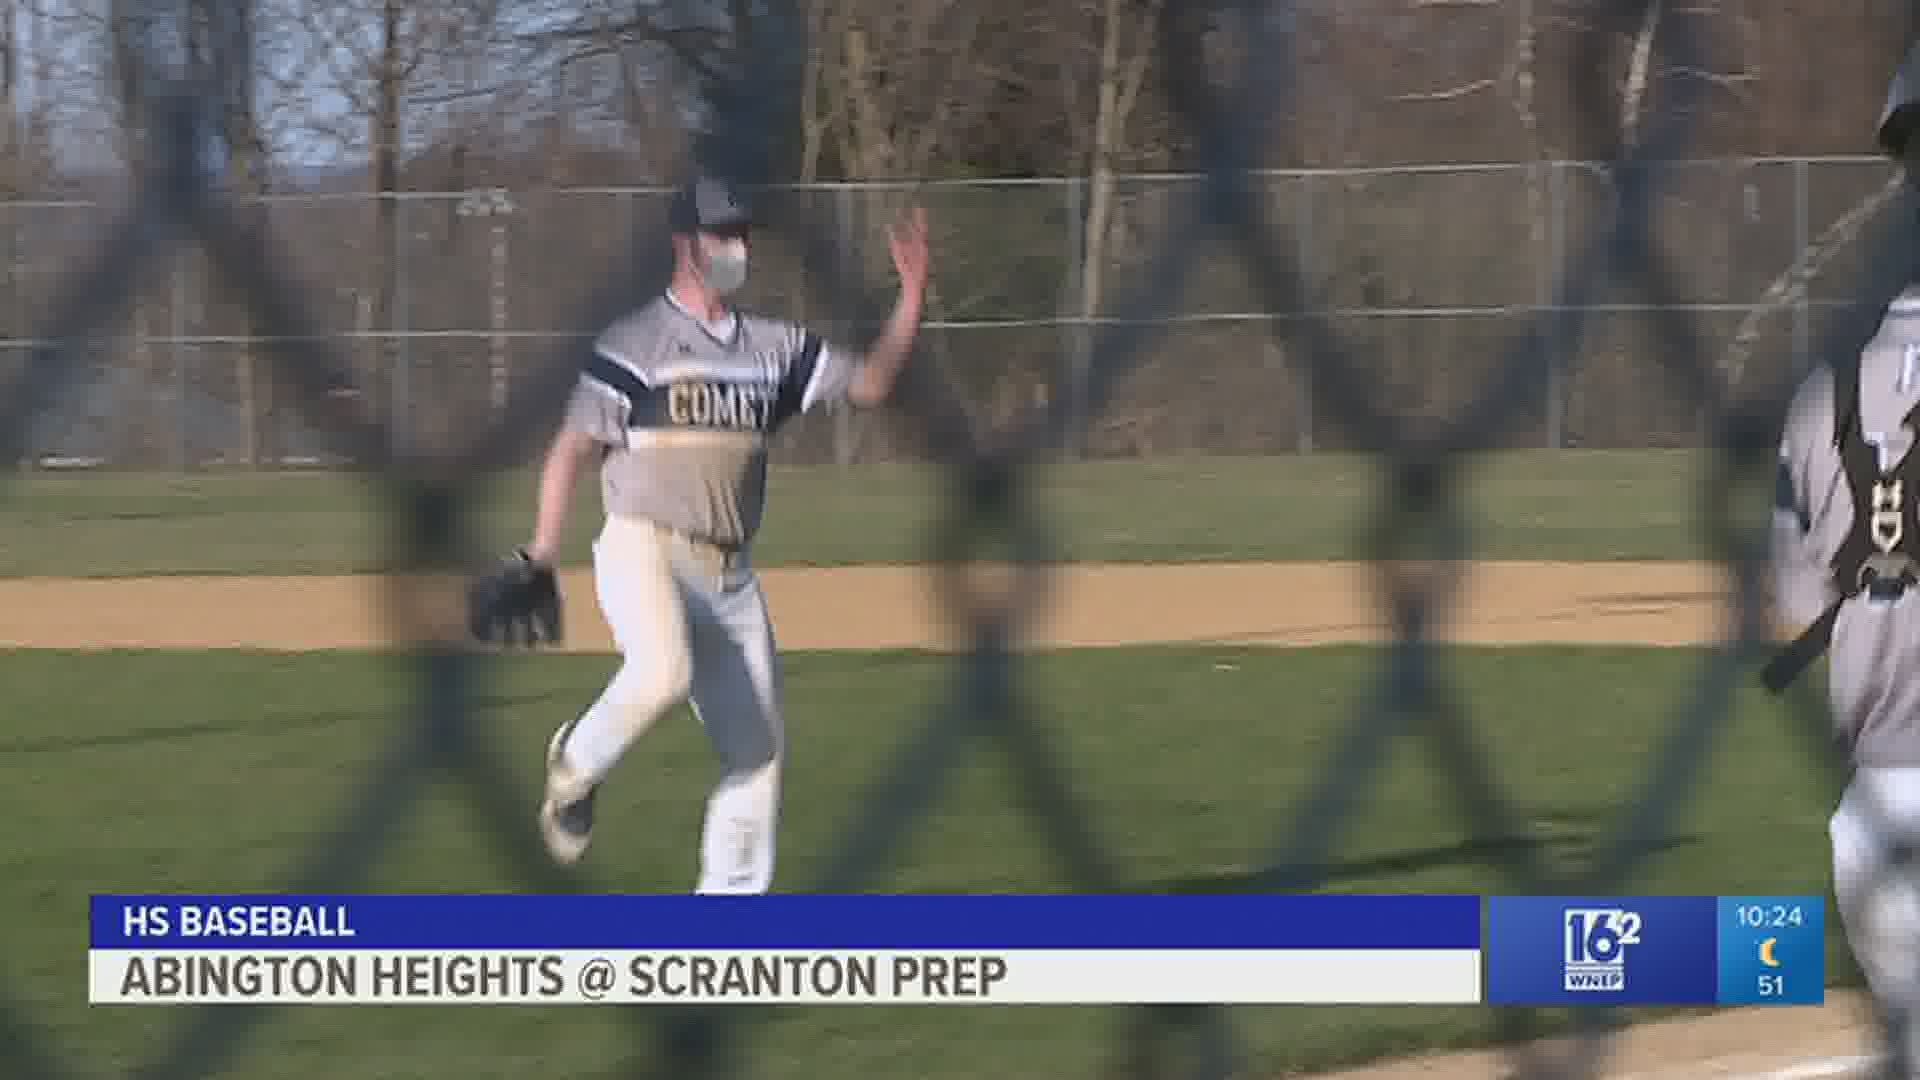 Abington Heights handled Scranton Prep 11-0 in HS softball, and 8-1 in HS baseball.